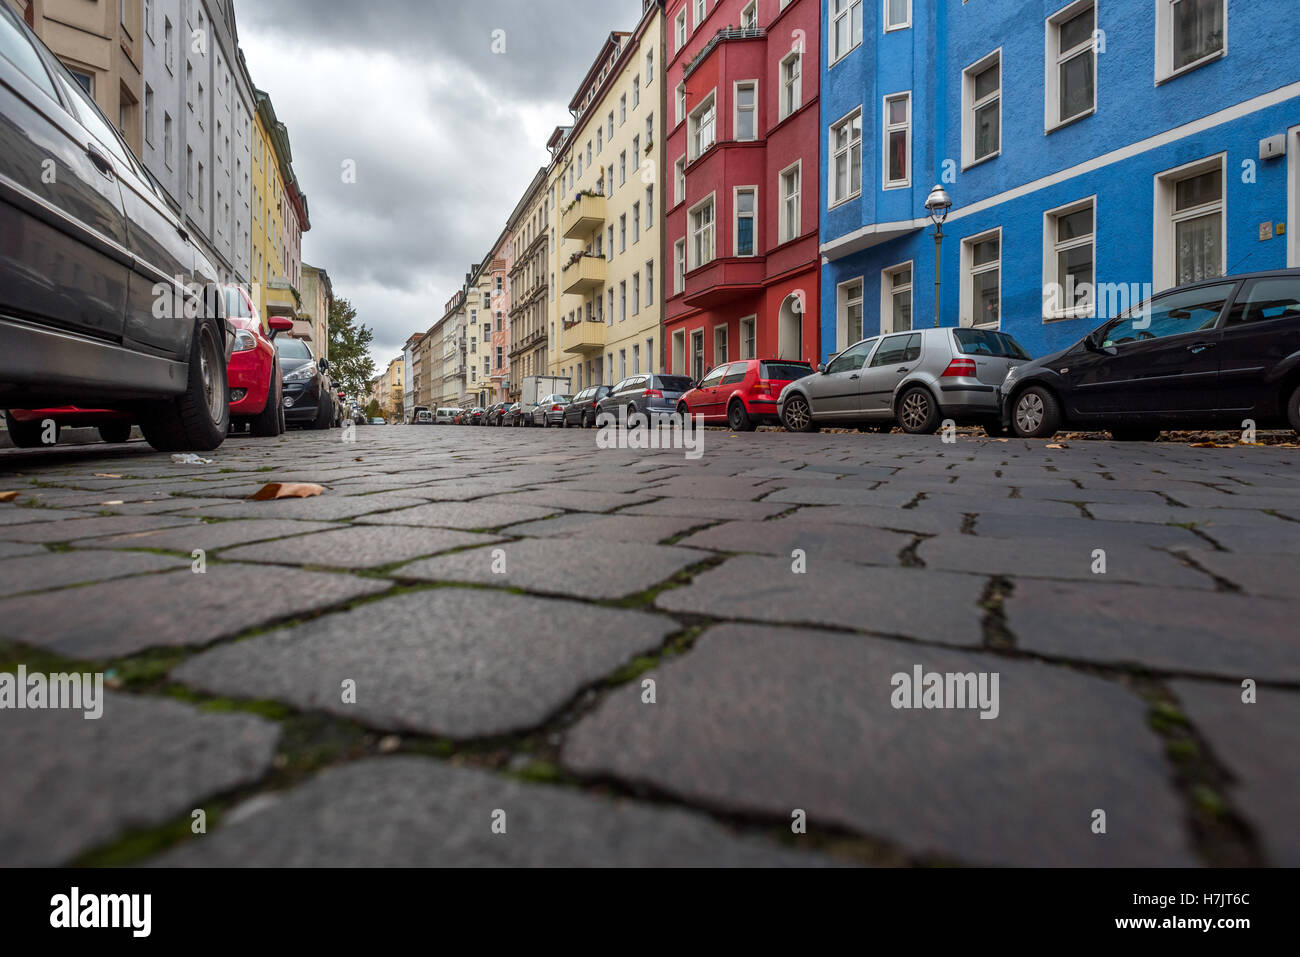 Traditional cobbled streets in Kreuzberg, Berlin Stock Photo